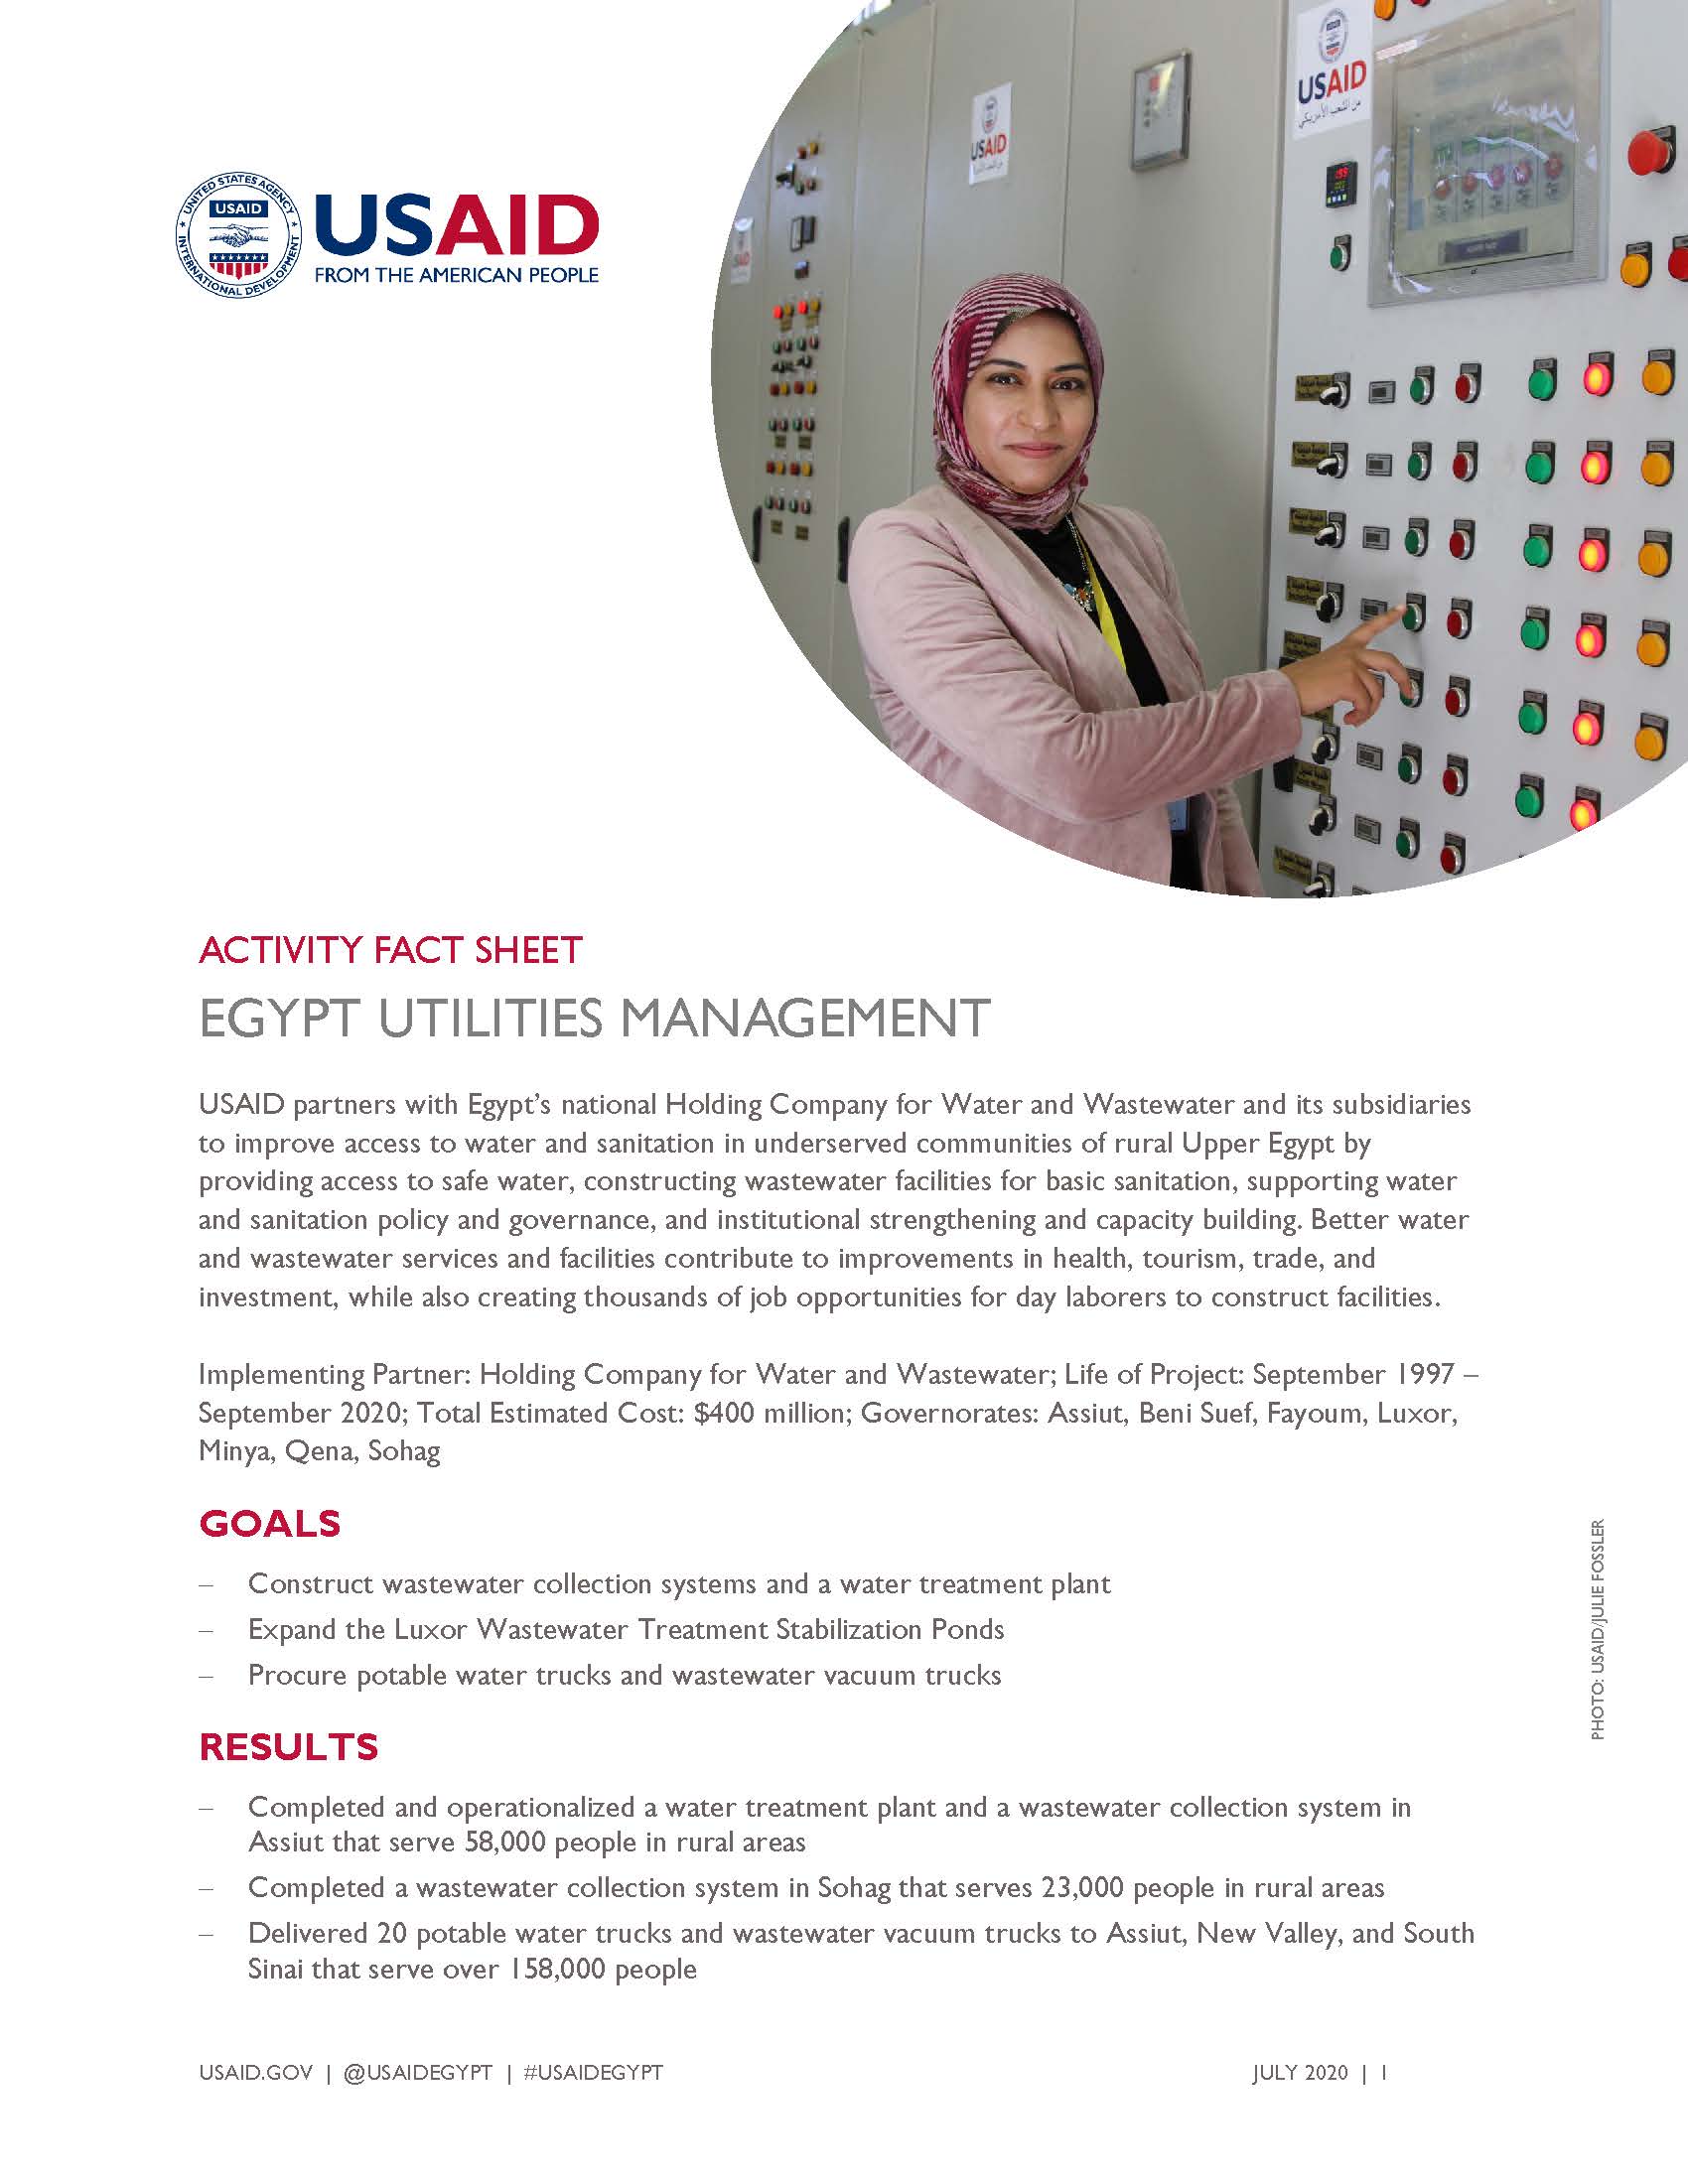 USAID/Egypt Activity Fact Sheet: Egypt Utilities Management